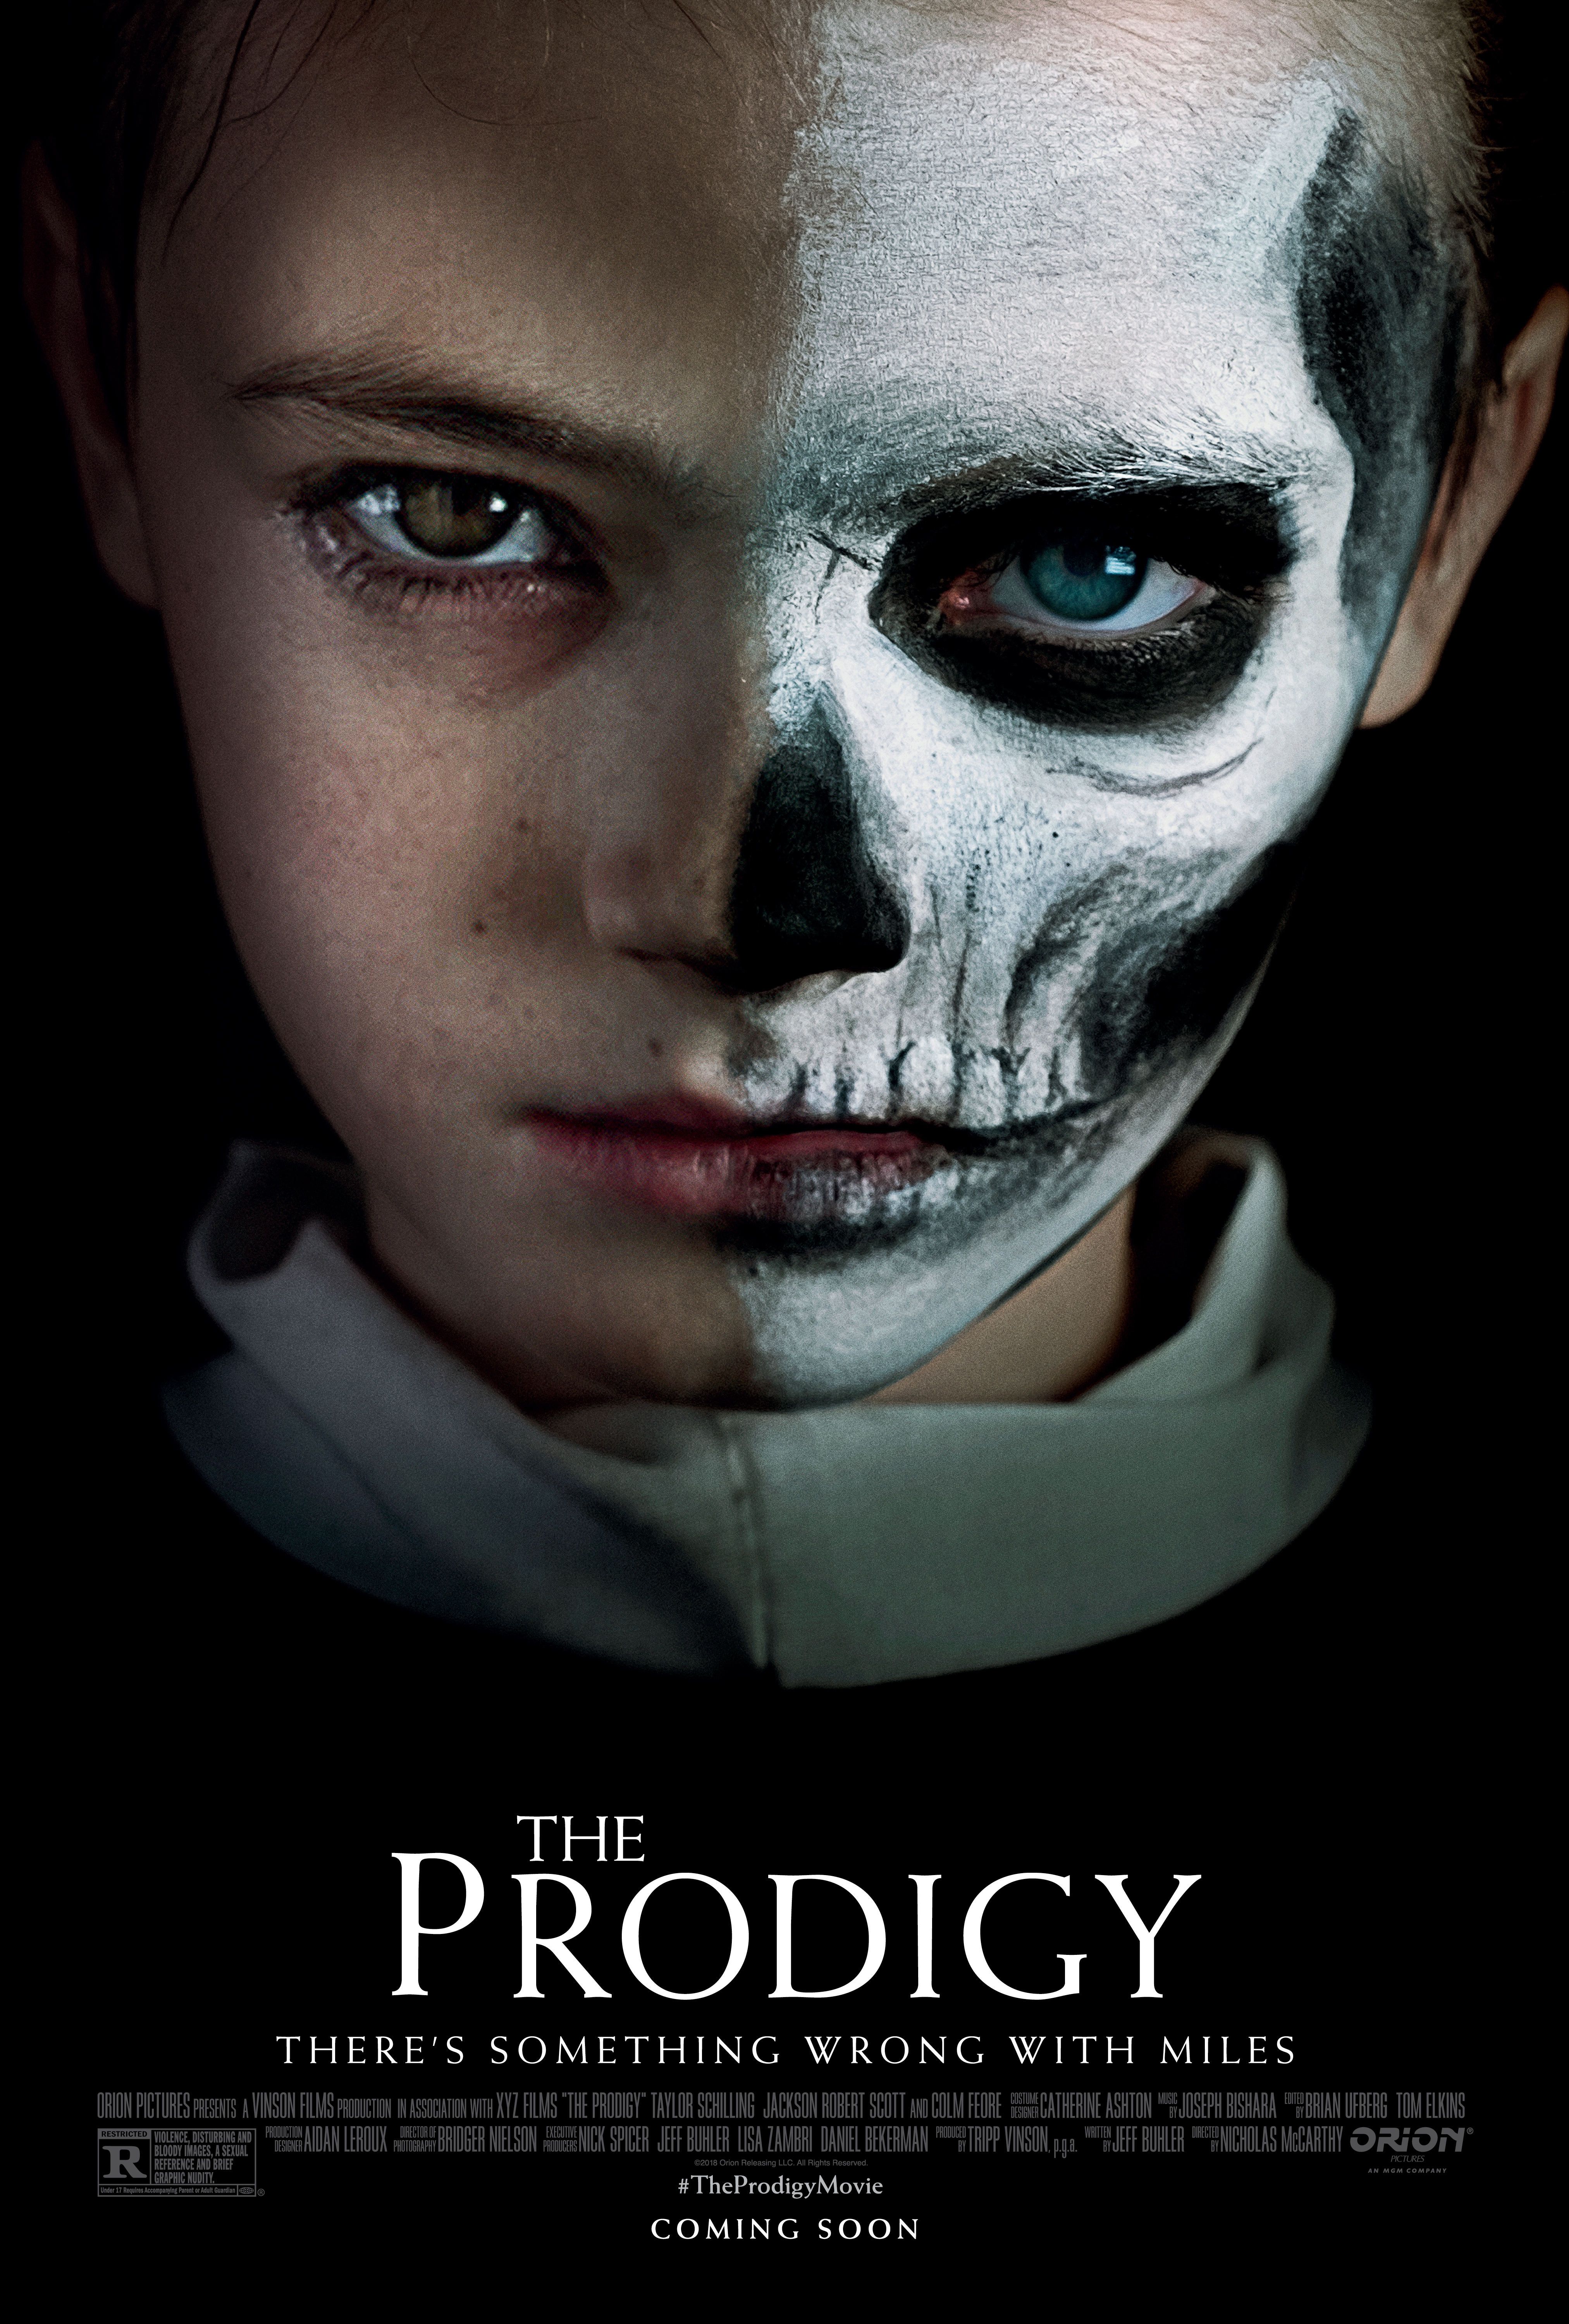 Sweet Star (Jackson Robert Scott), The-Prodigy-Horror-Movie-585x378 @iMGSRC.RU